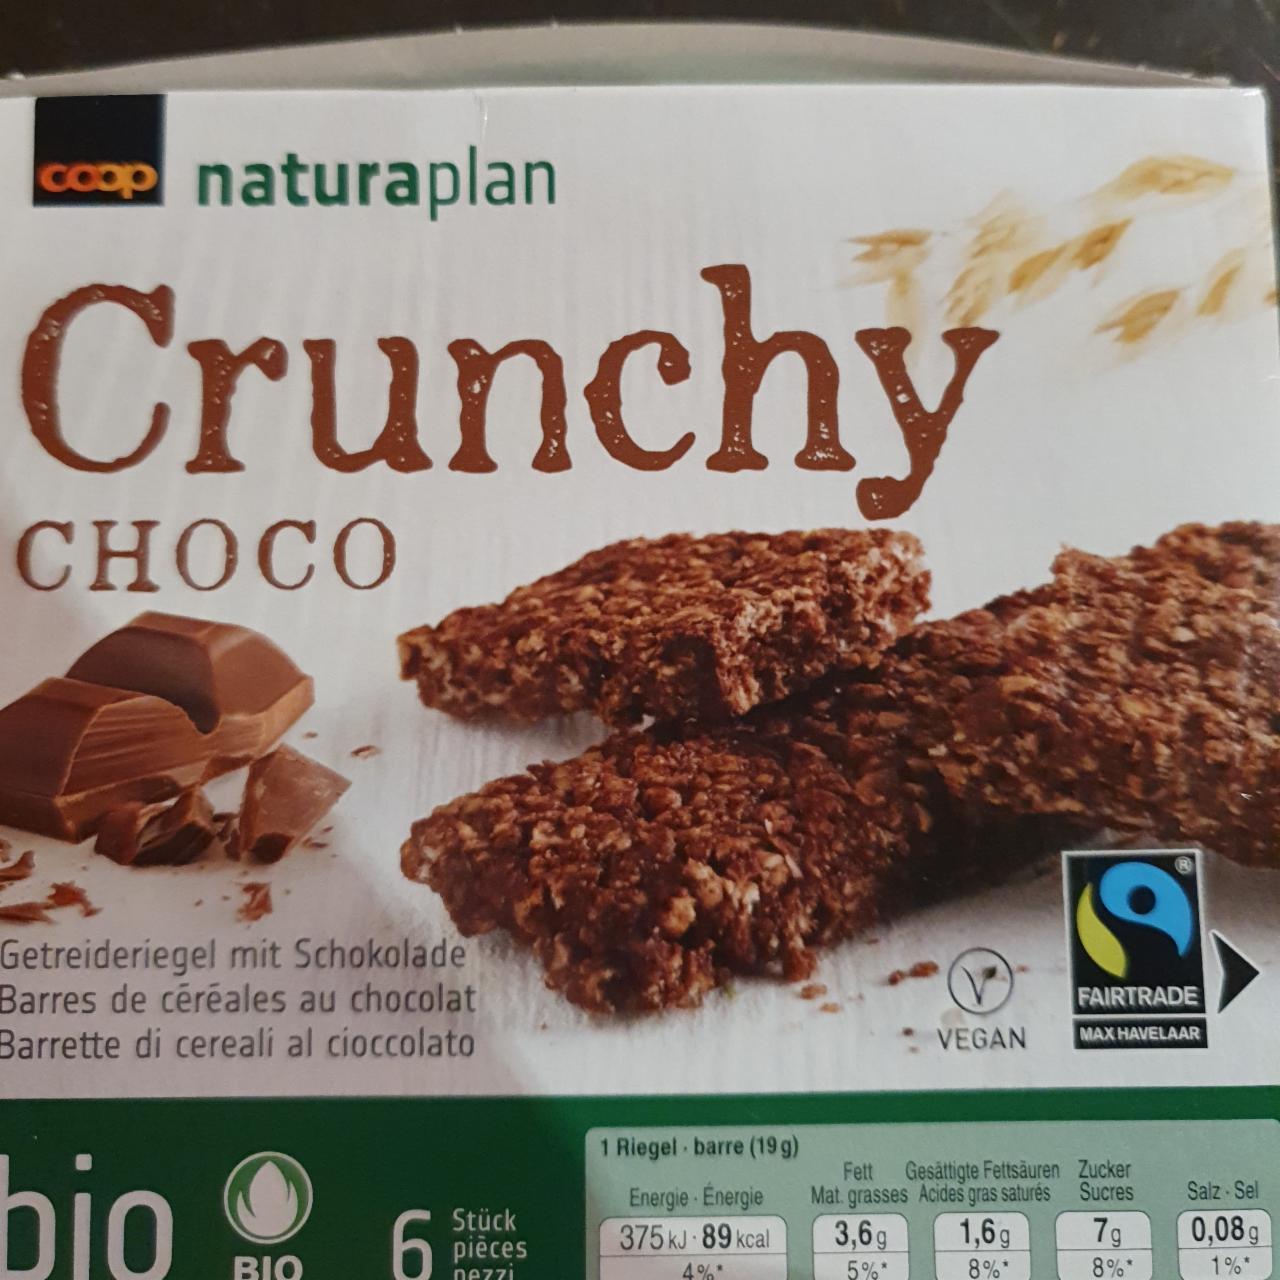 Fotografie - Crunchy choco Bio Coop Naturaplan